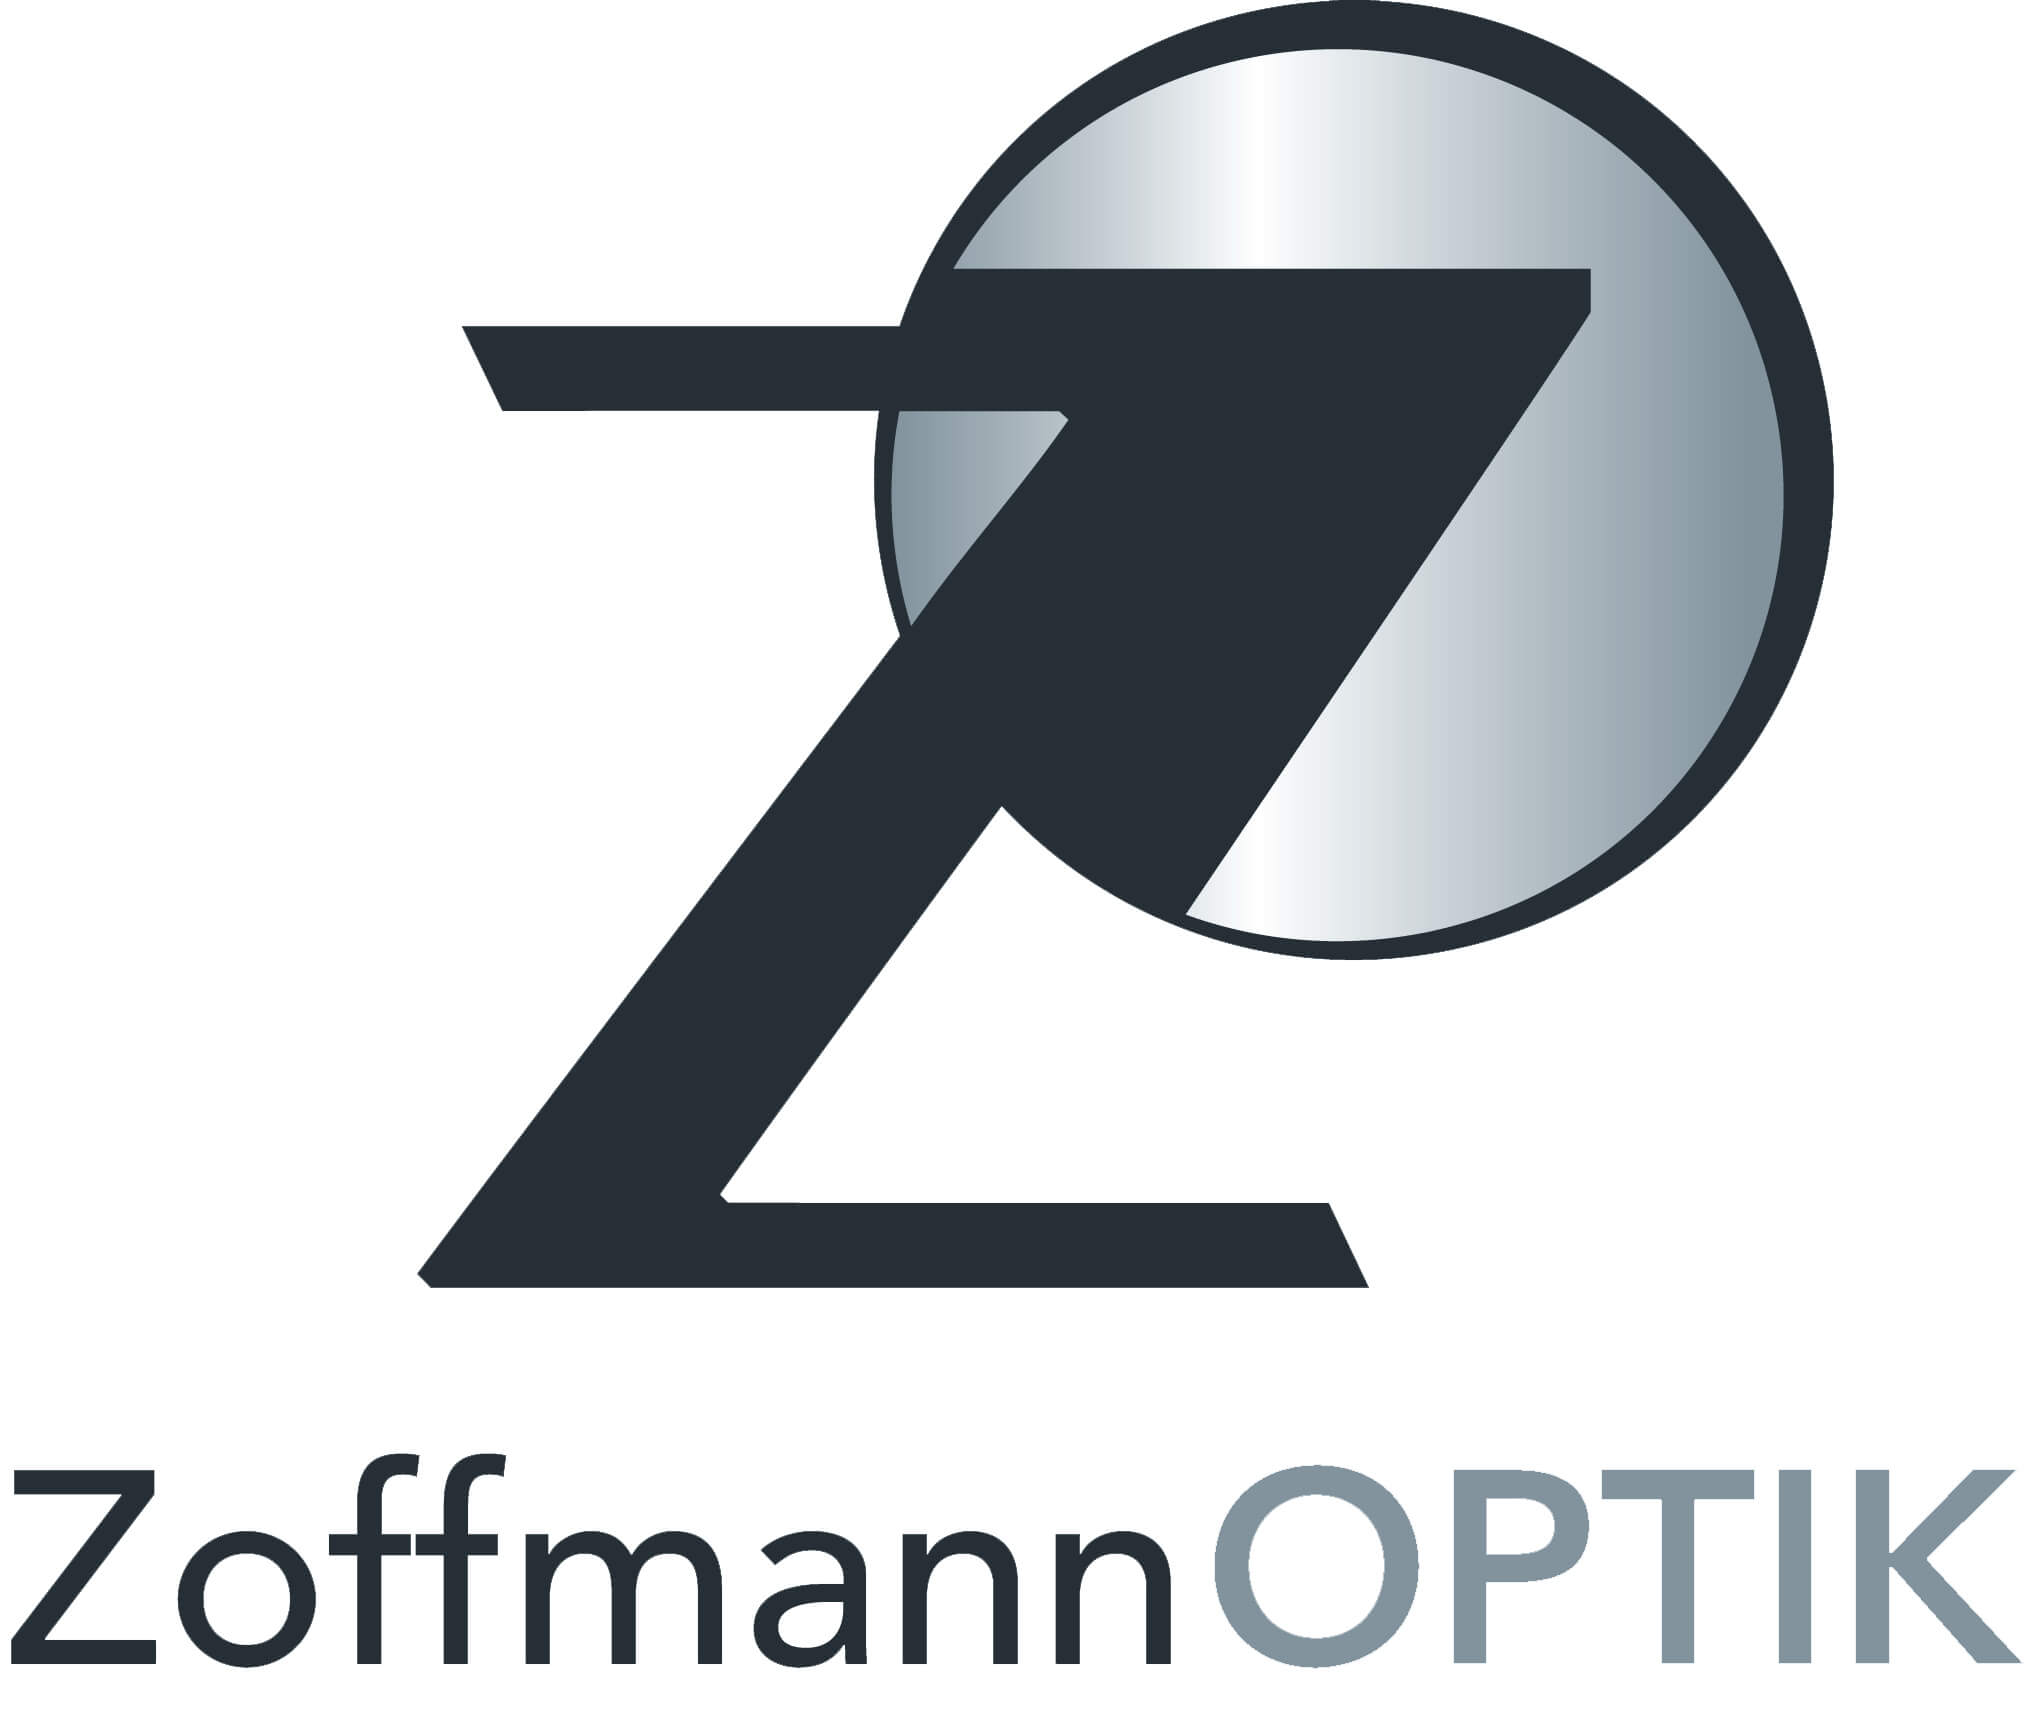 Zoffmann Optik Fredericia – din lokale optiker